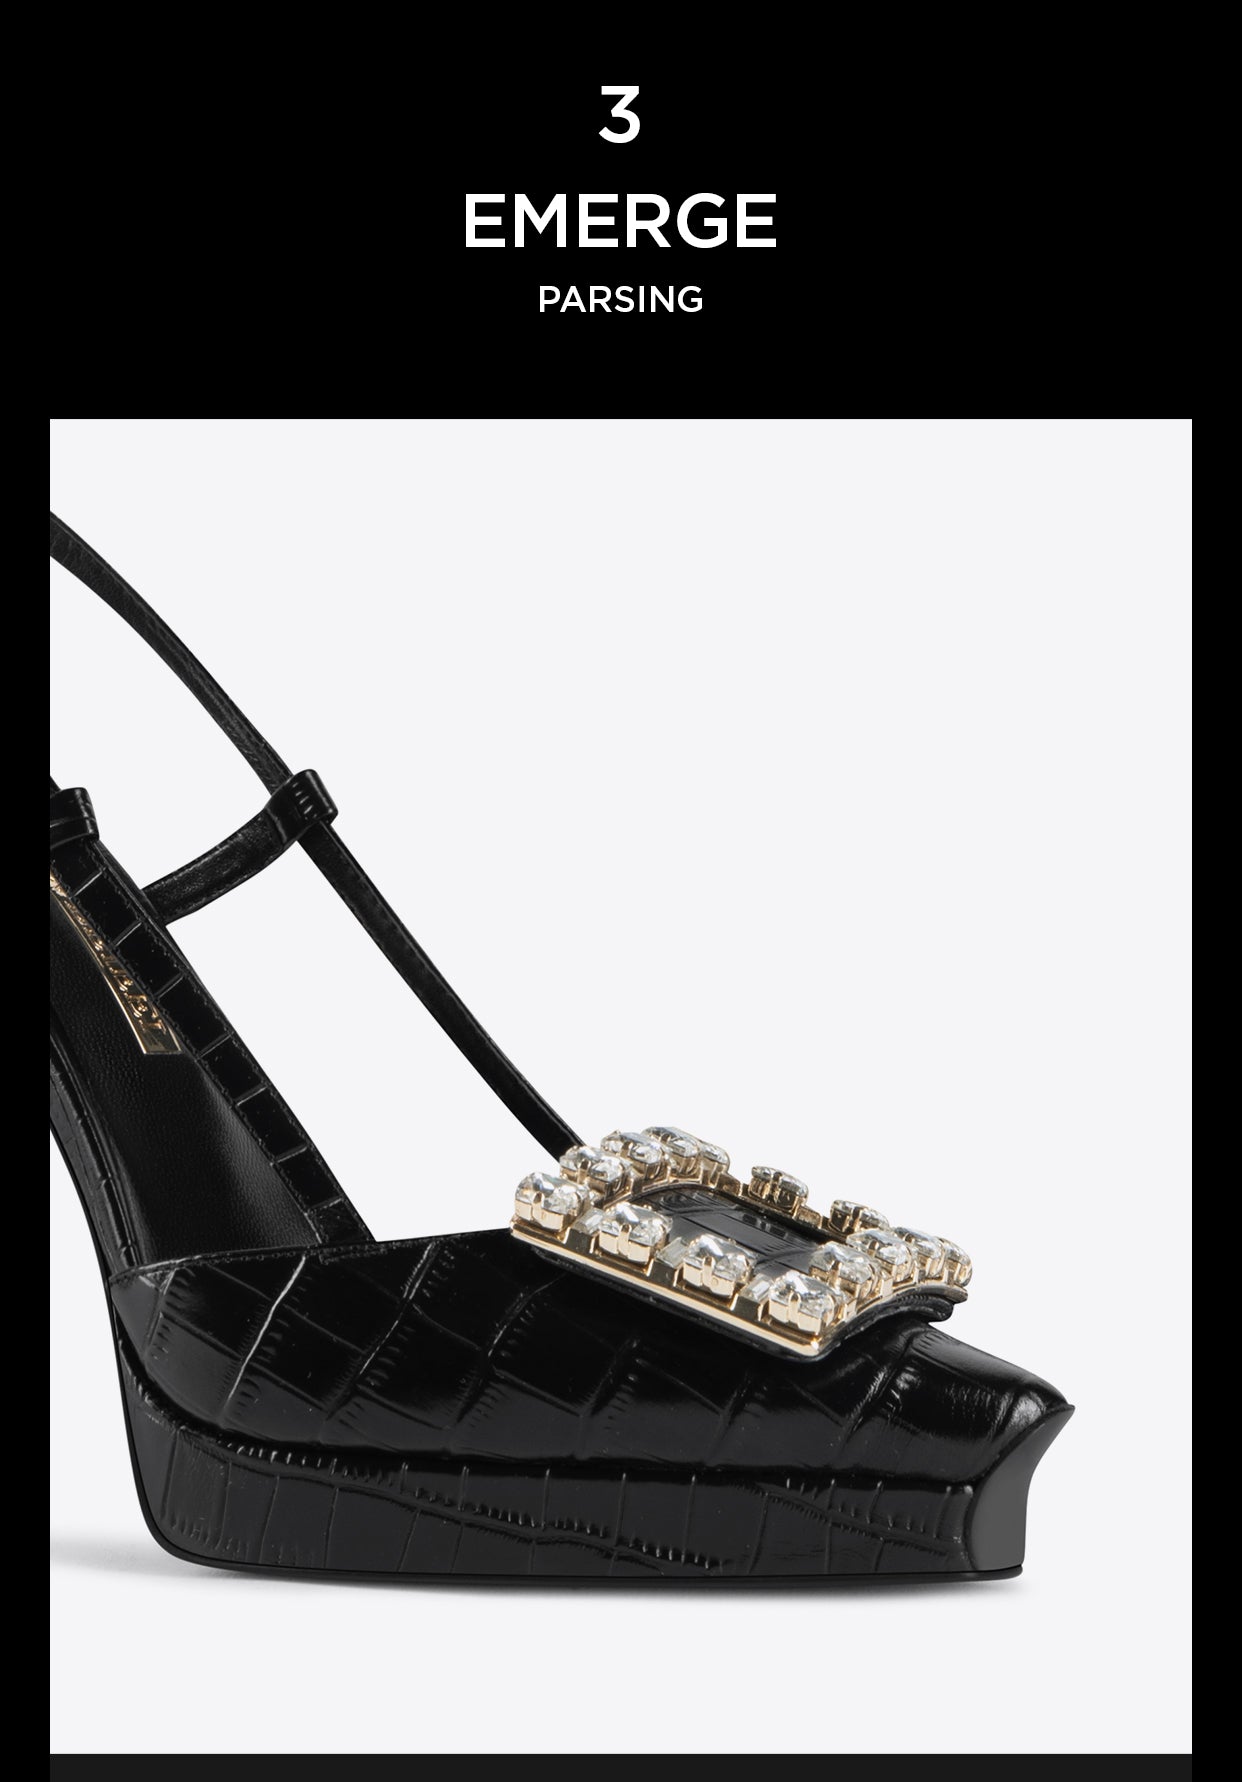 Gorgeous rhinestone square buckle black stiletto high heel sling back shoes pumps - Tabitha